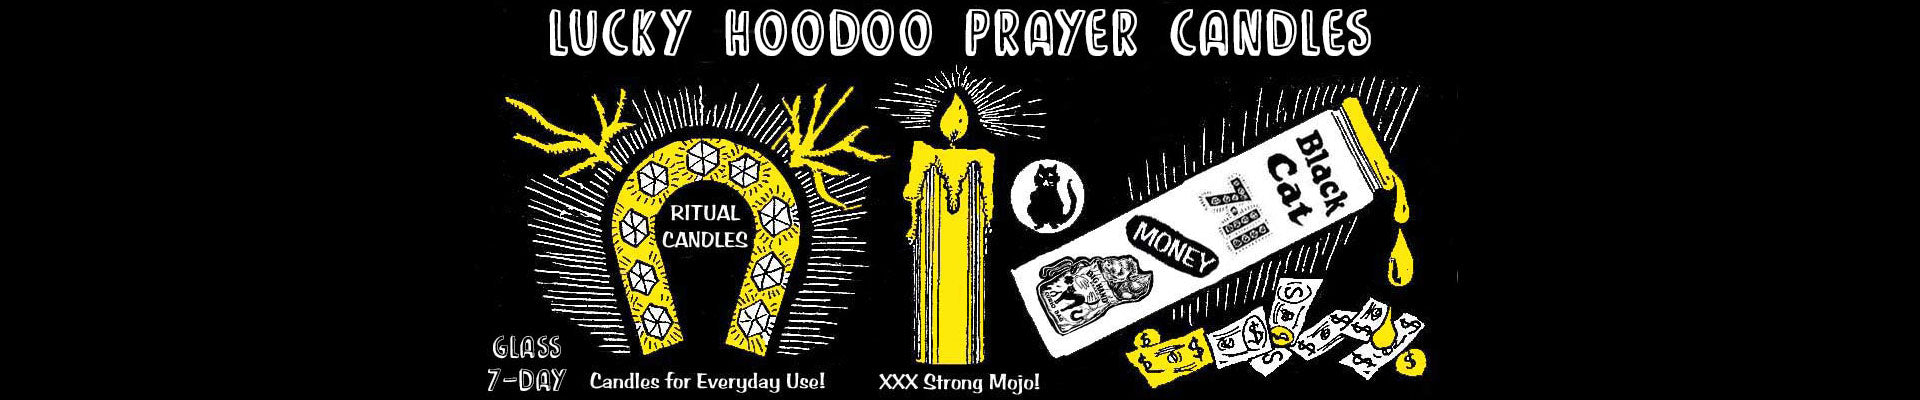 Hoodoo Prayer Candles